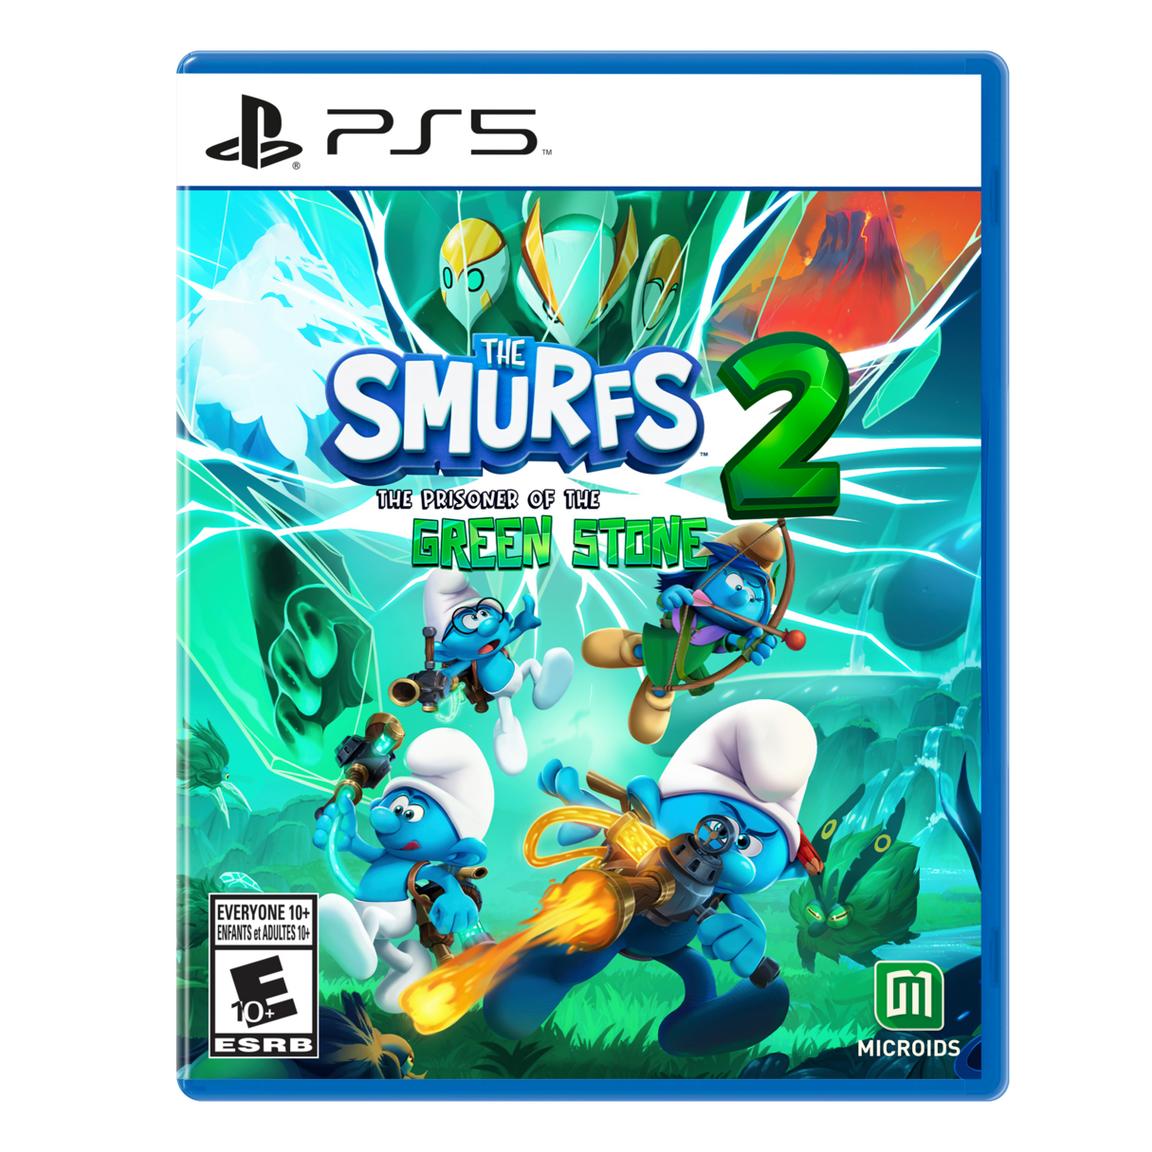 Видеоигра The Smurfs 2: Prisoner of the Green Stone - PlayStation 5